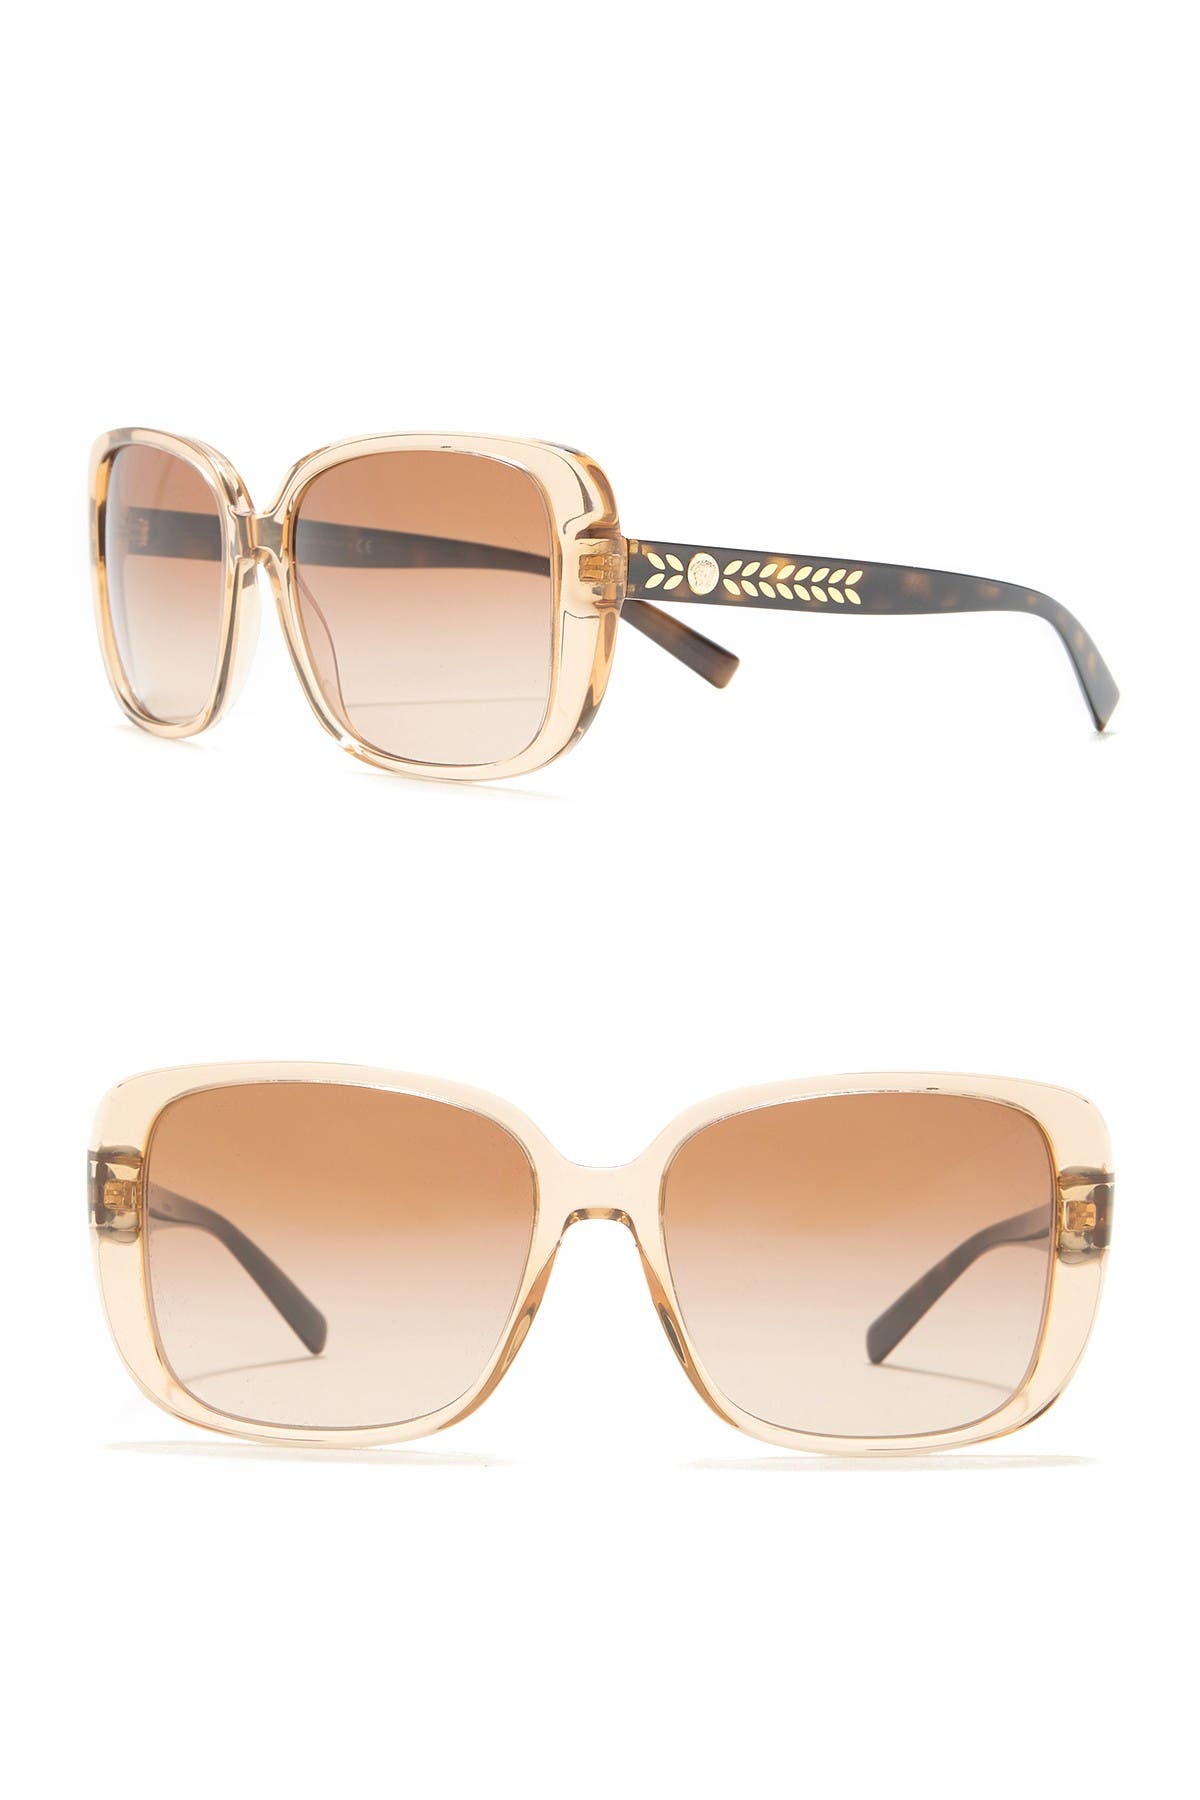 versace 56mm square sunglasses